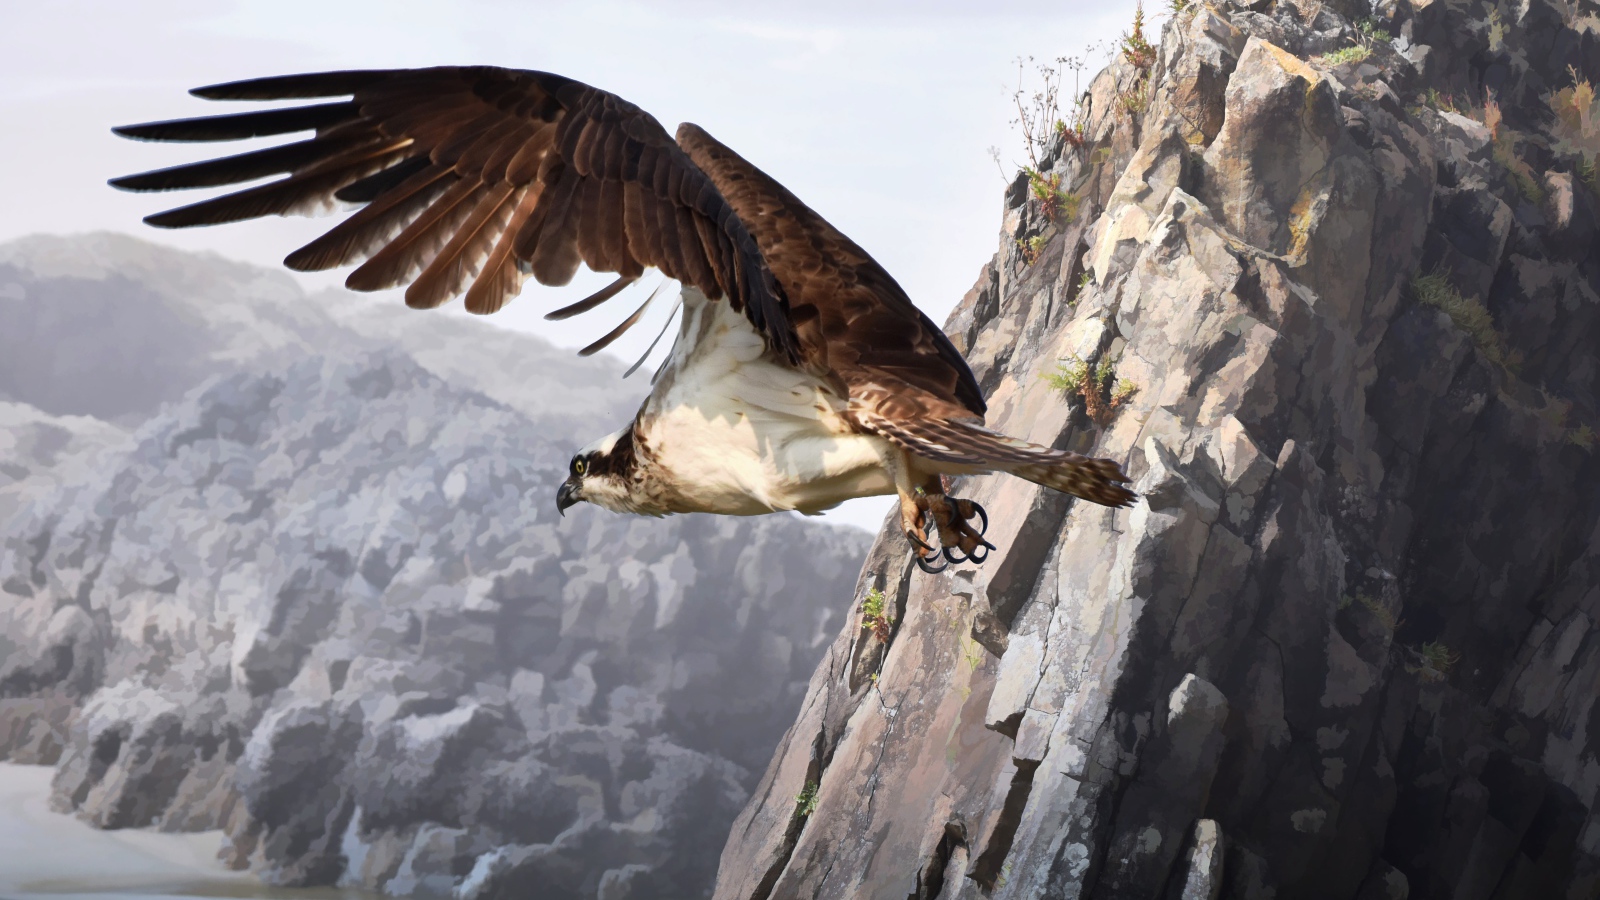 A large predatory falcon flies by the mountain